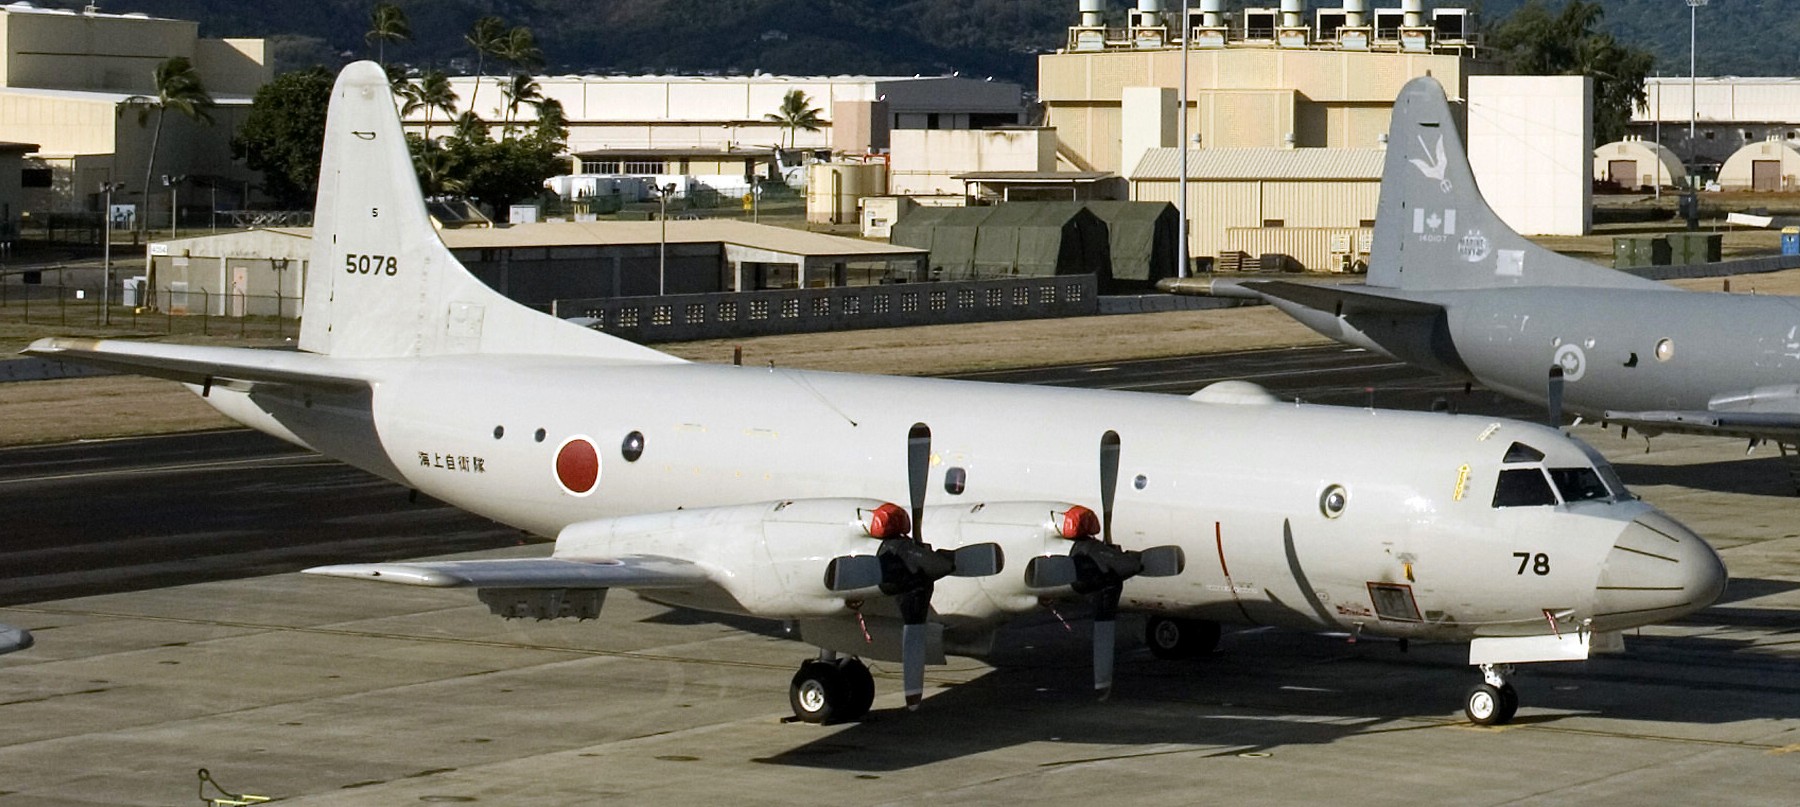 kawasaki p-3c orion patrol aircraft mpa japan maritime self defense force jmsdf 5078 02